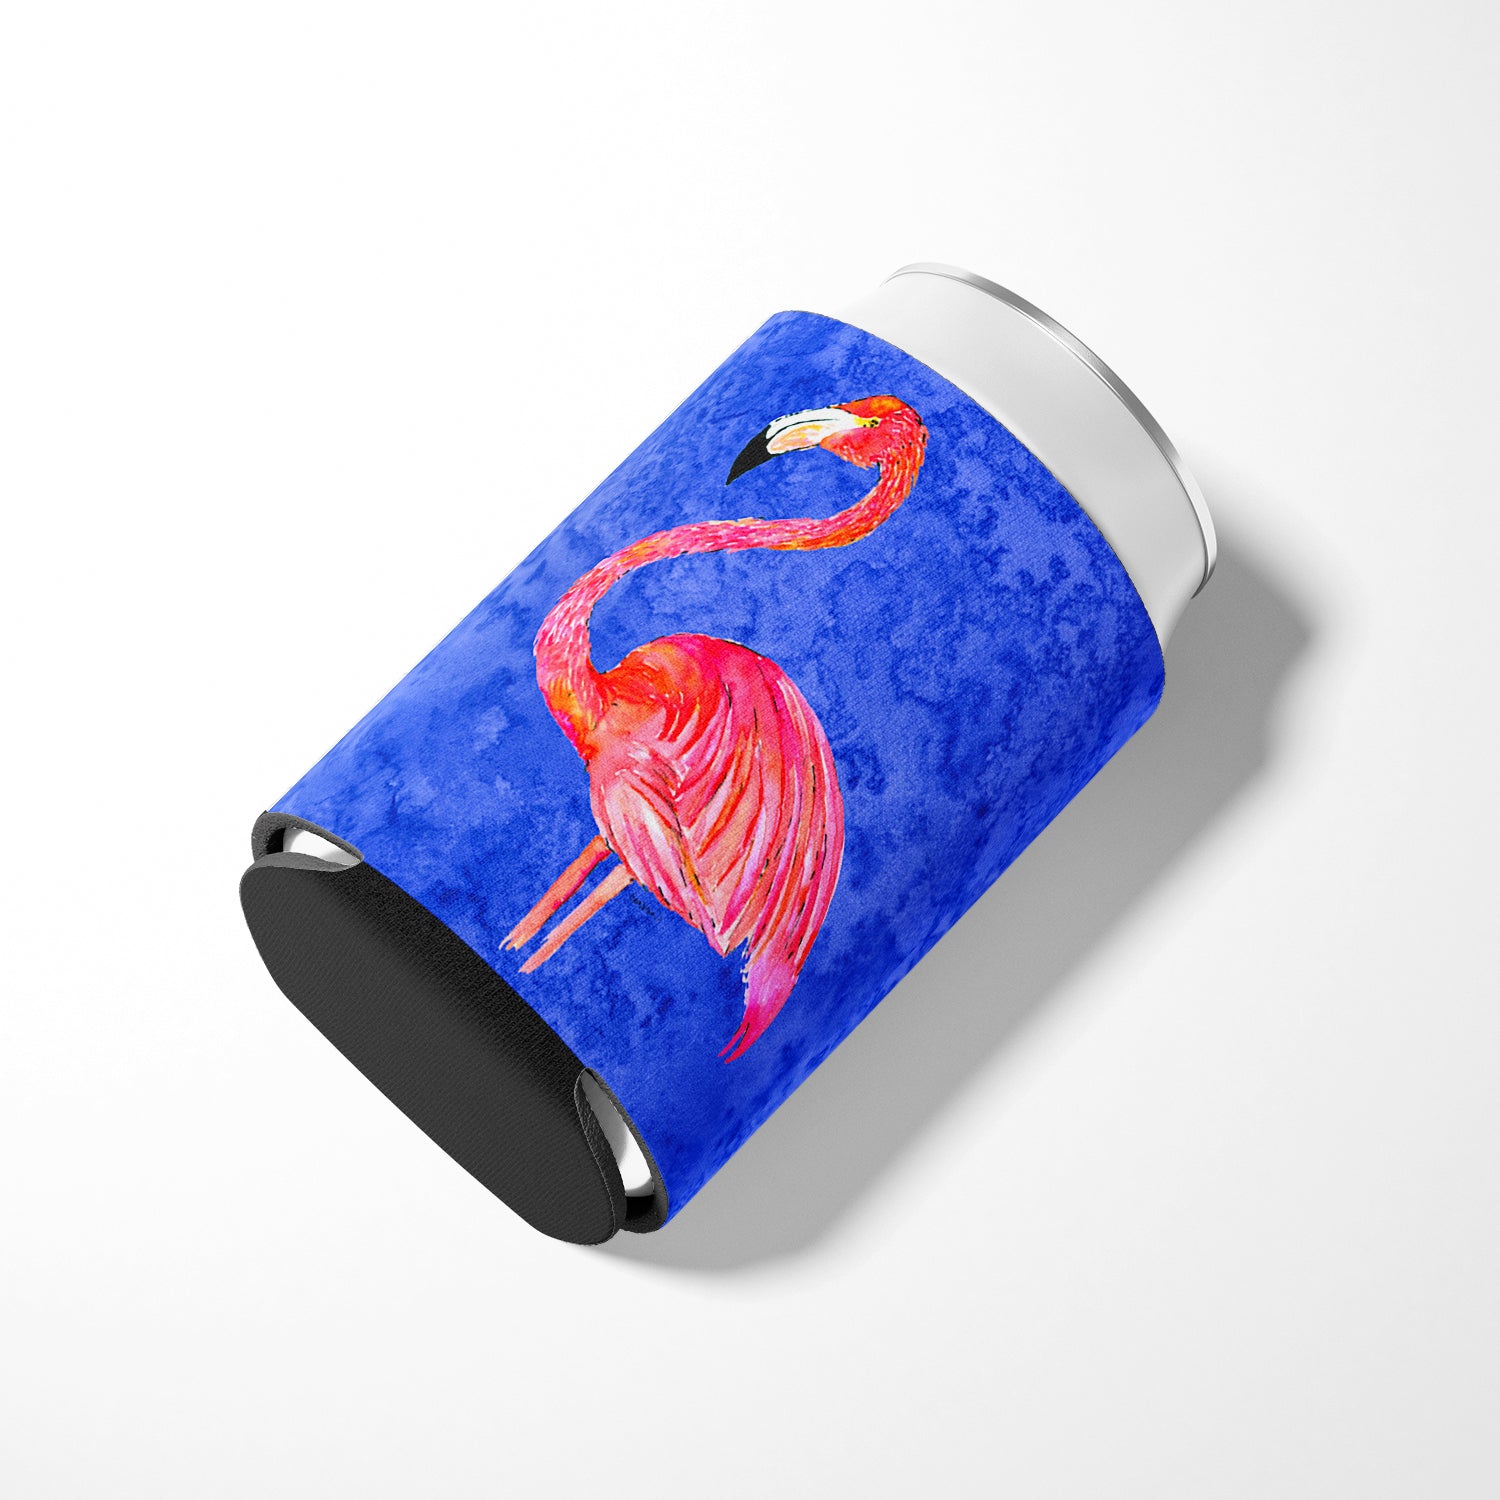 Bird - Flamingo Can or Bottle Beverage Insulator Hugger